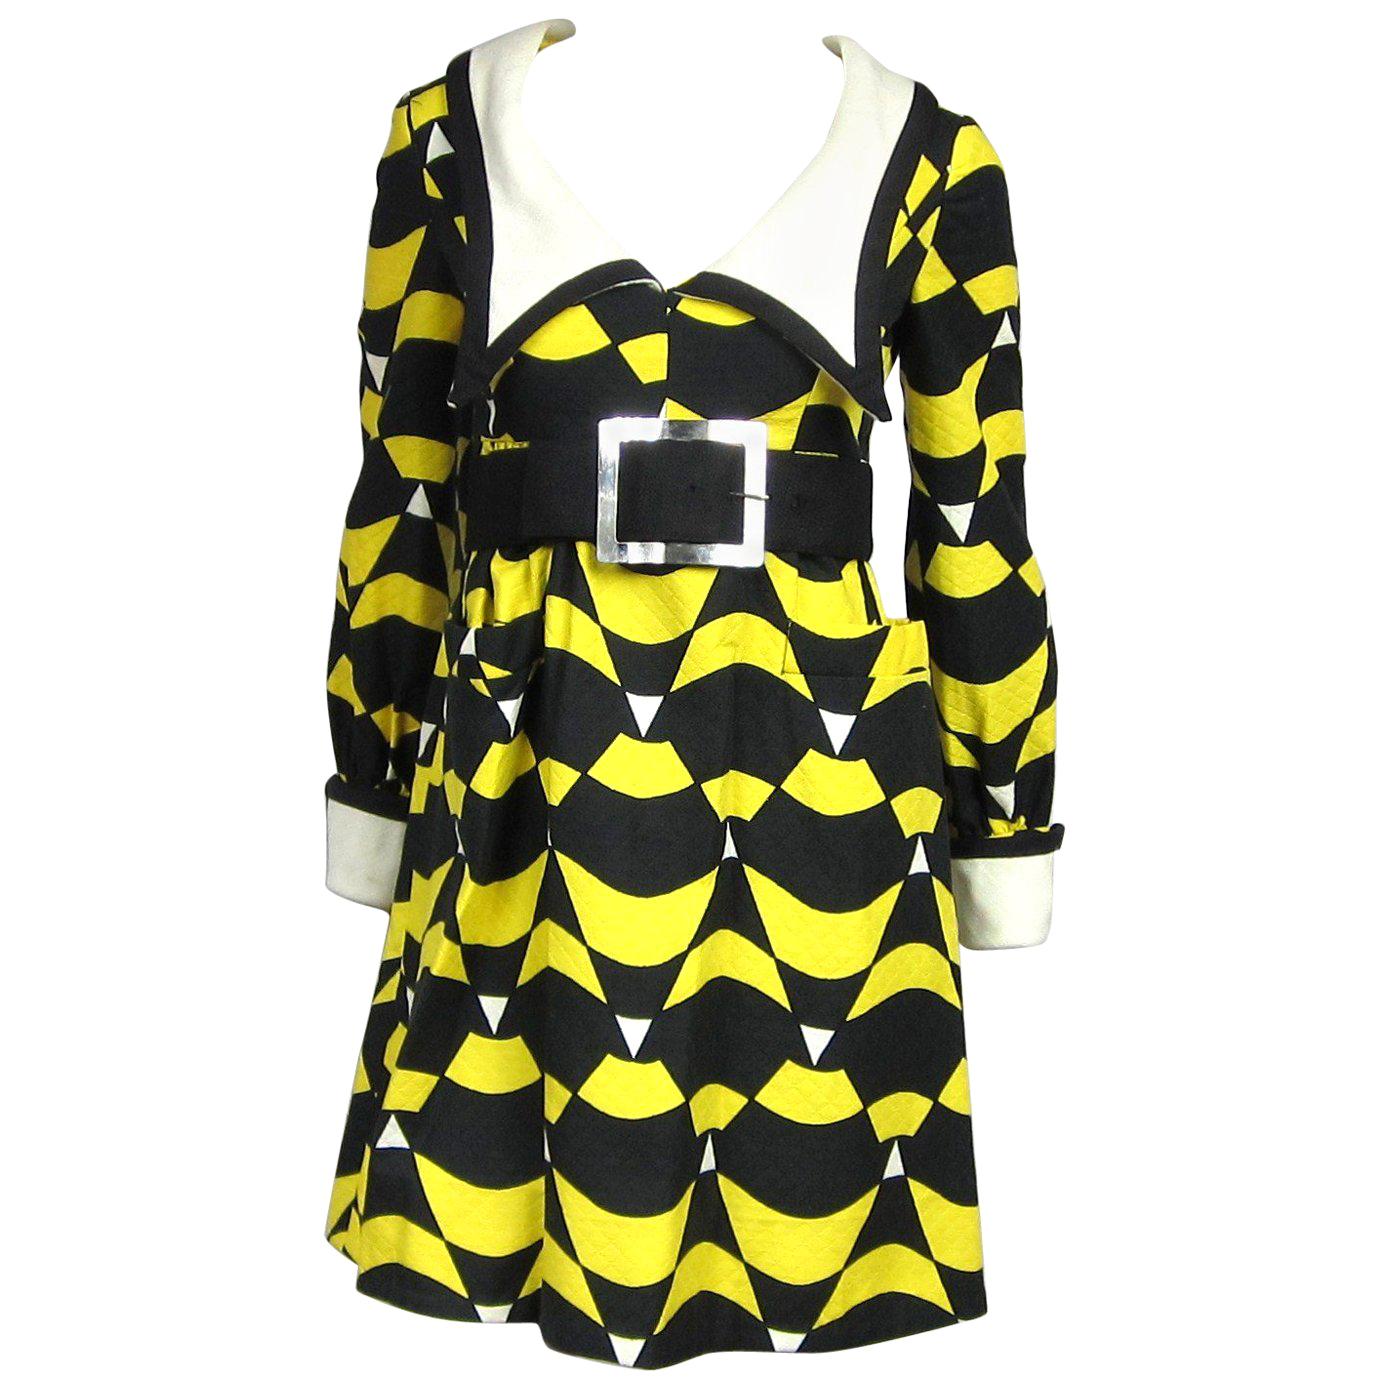  Mod Graphic Empire waist Yellow Black Midi Dress Mam'selle Betty Carol 1960s